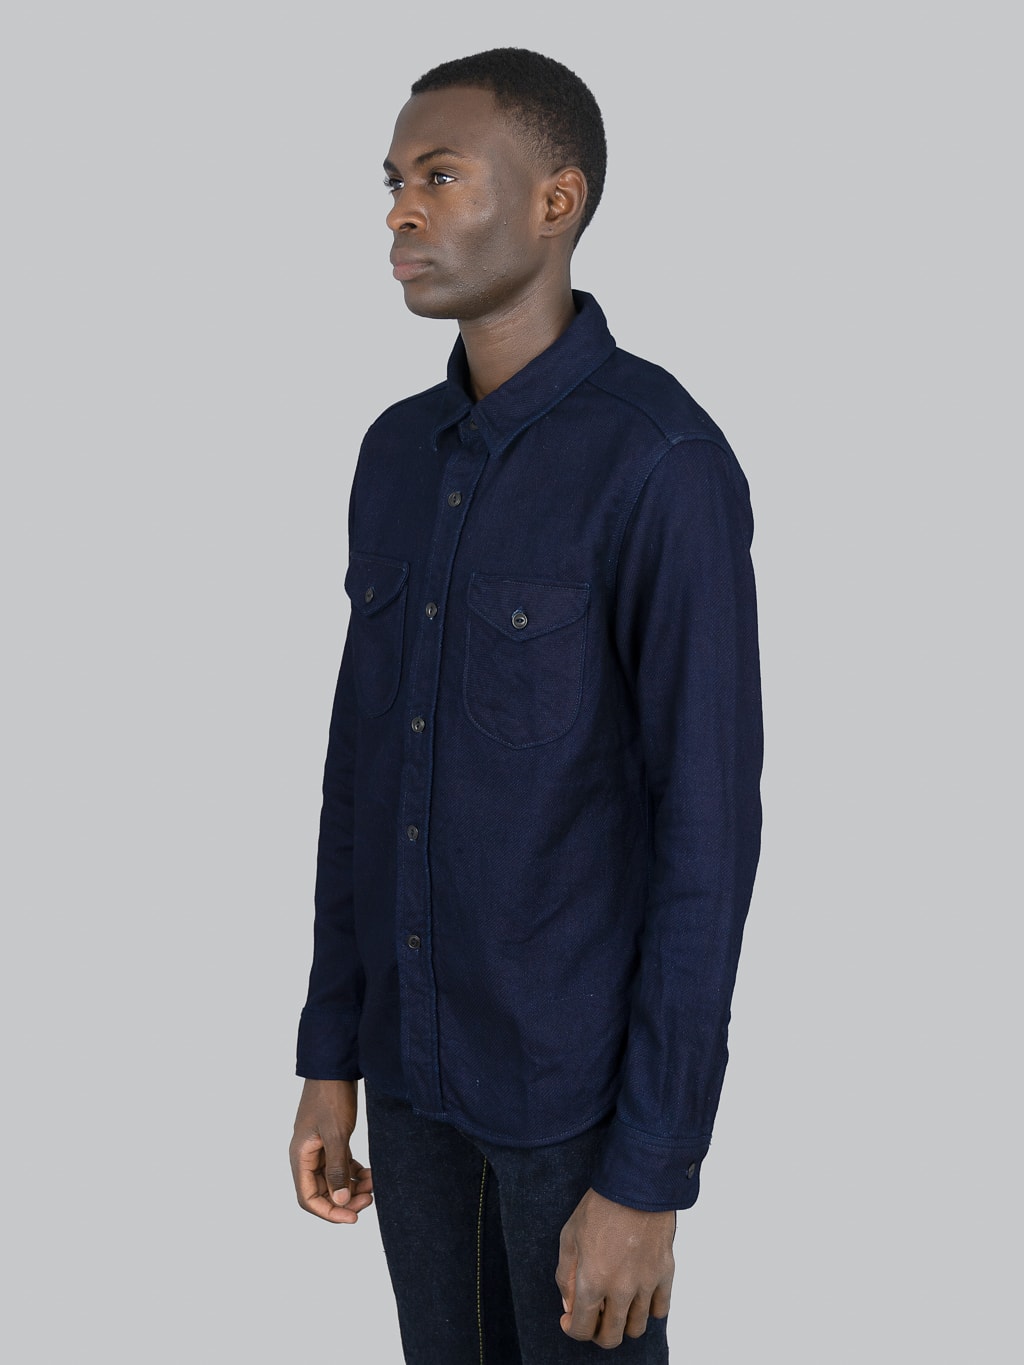 UES Indigo Heavy Selvedge Flannel Shirt model side fit